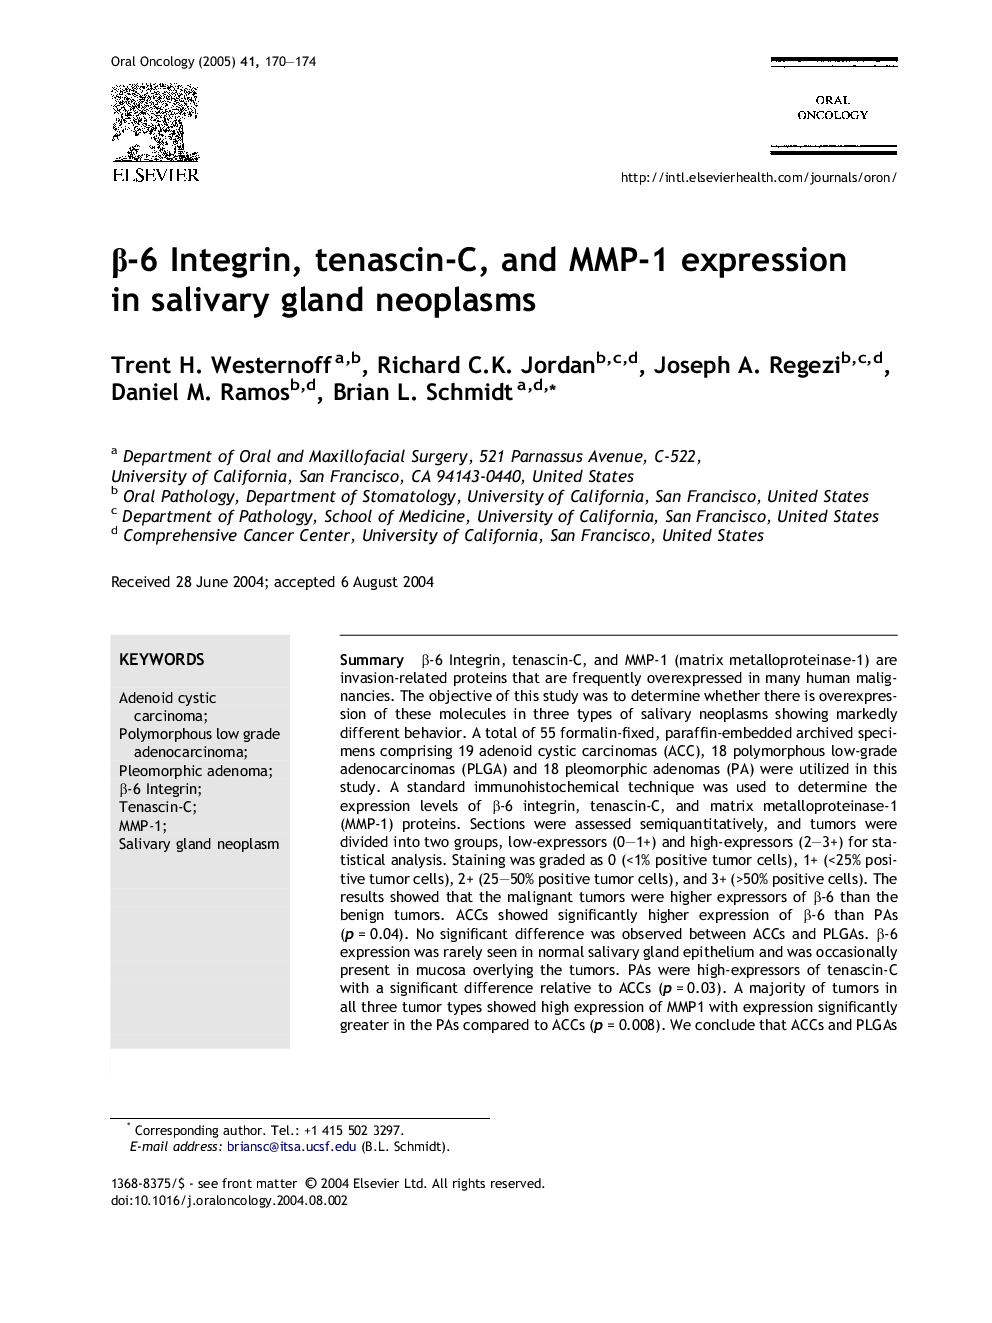 Î²-6 Integrin, tenascin-C, and MMP-1 expression in salivary gland neoplasms